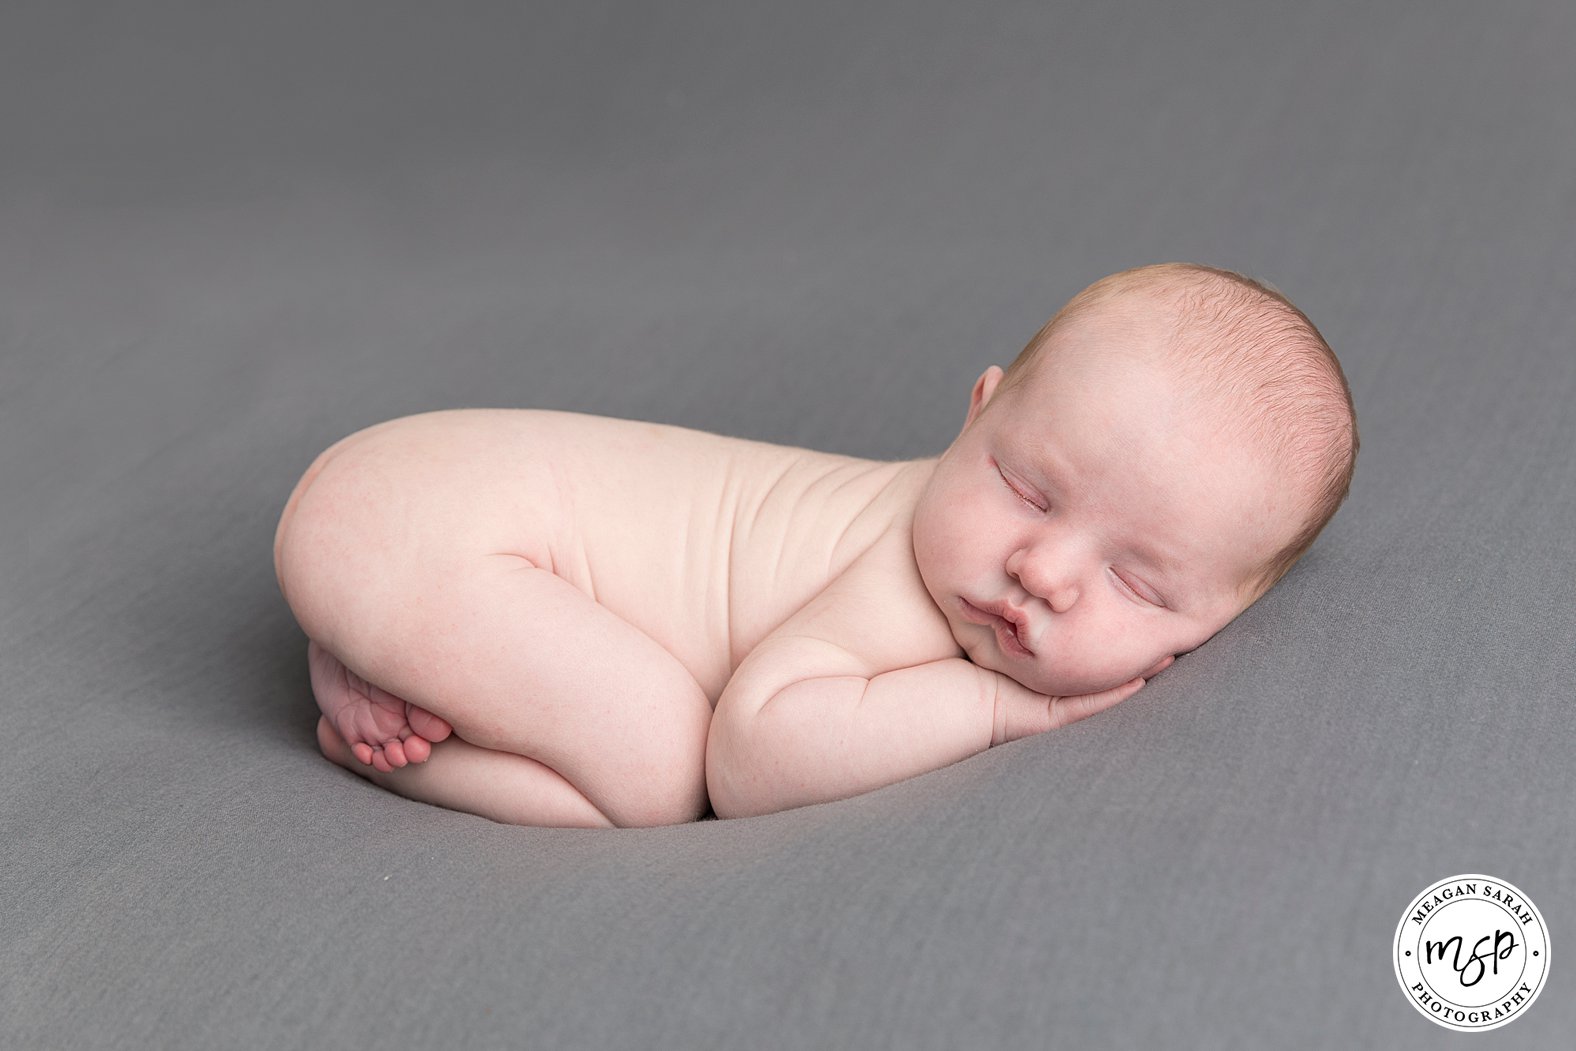 Newborn baby photos,Photos of newborn baby,Newborn Photography,Baby photography,Leeds Photographer,Leeds Newborn Photographer,Studio,Family,Professional photography,